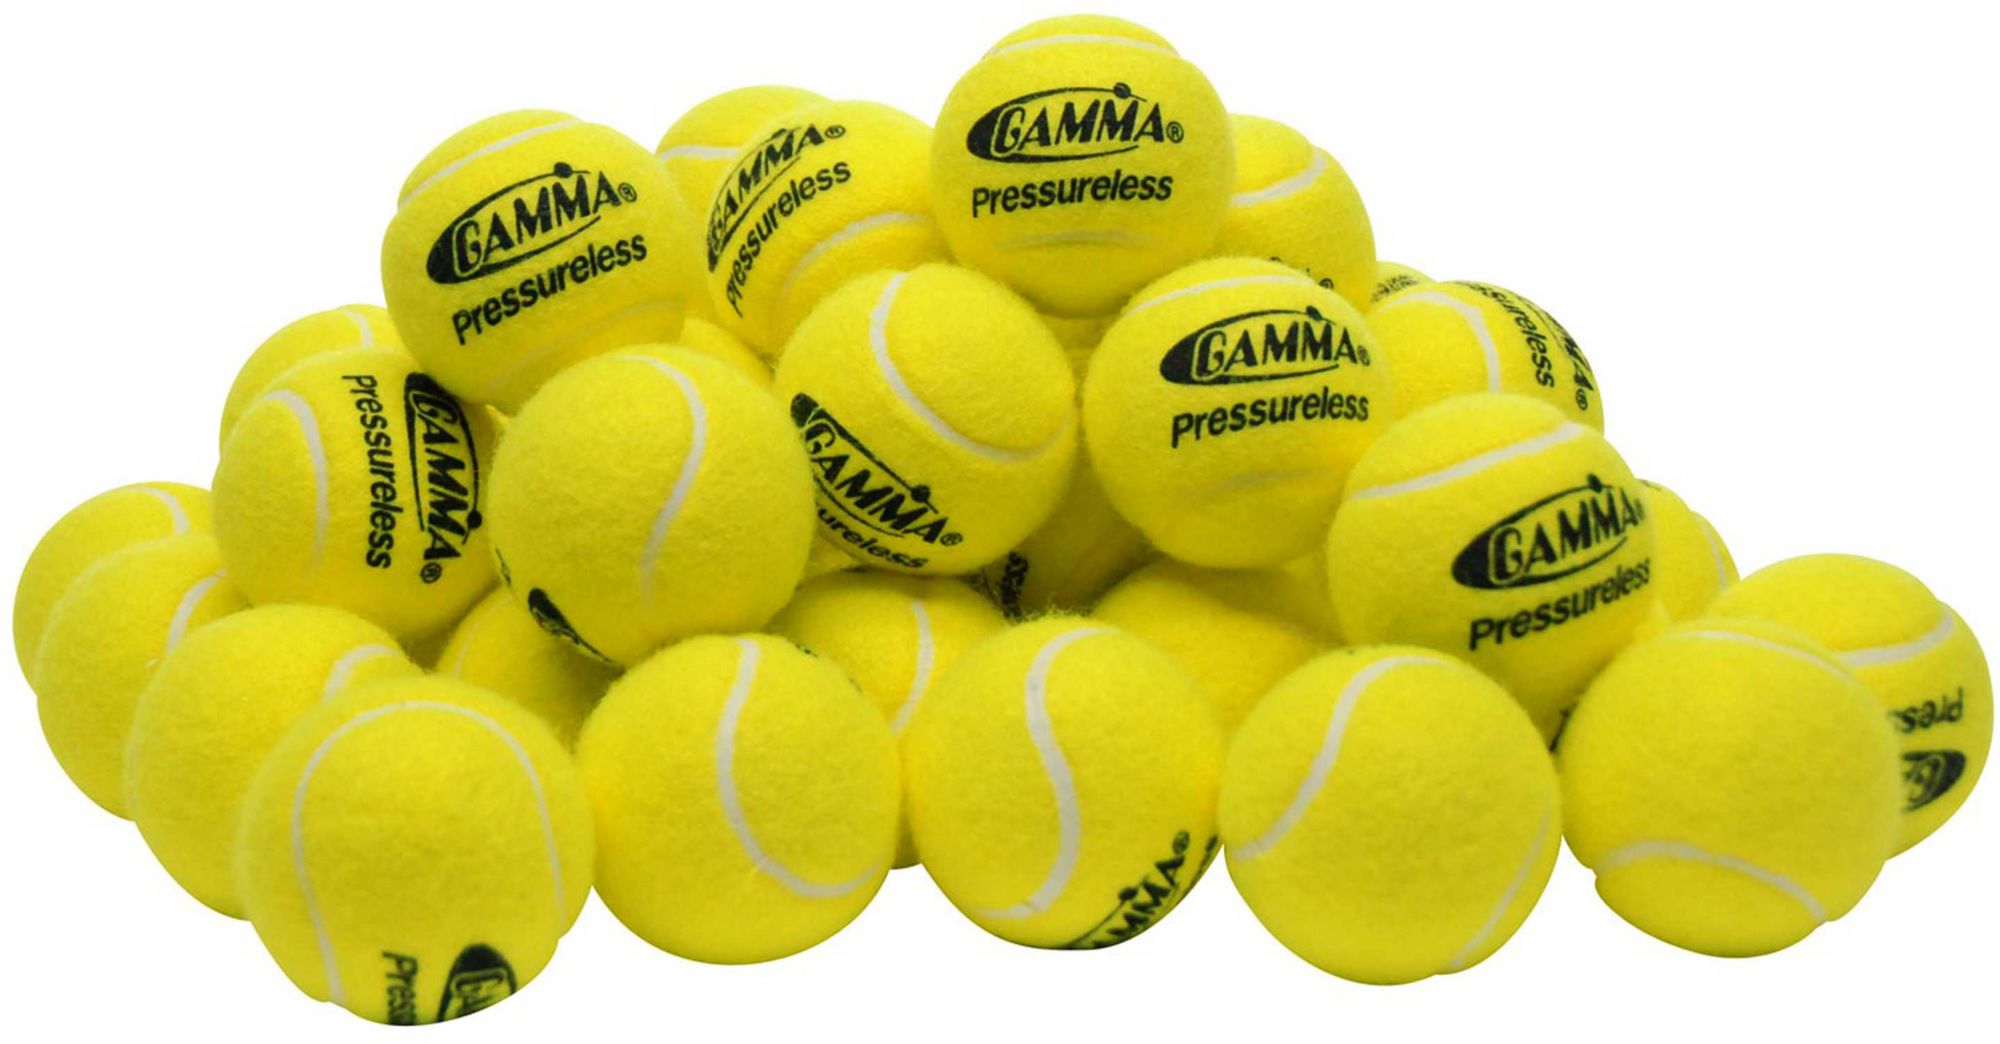 GAMMA Pressureless Practice Tennis Balls - 60 Ball Pack | DICK'S ...